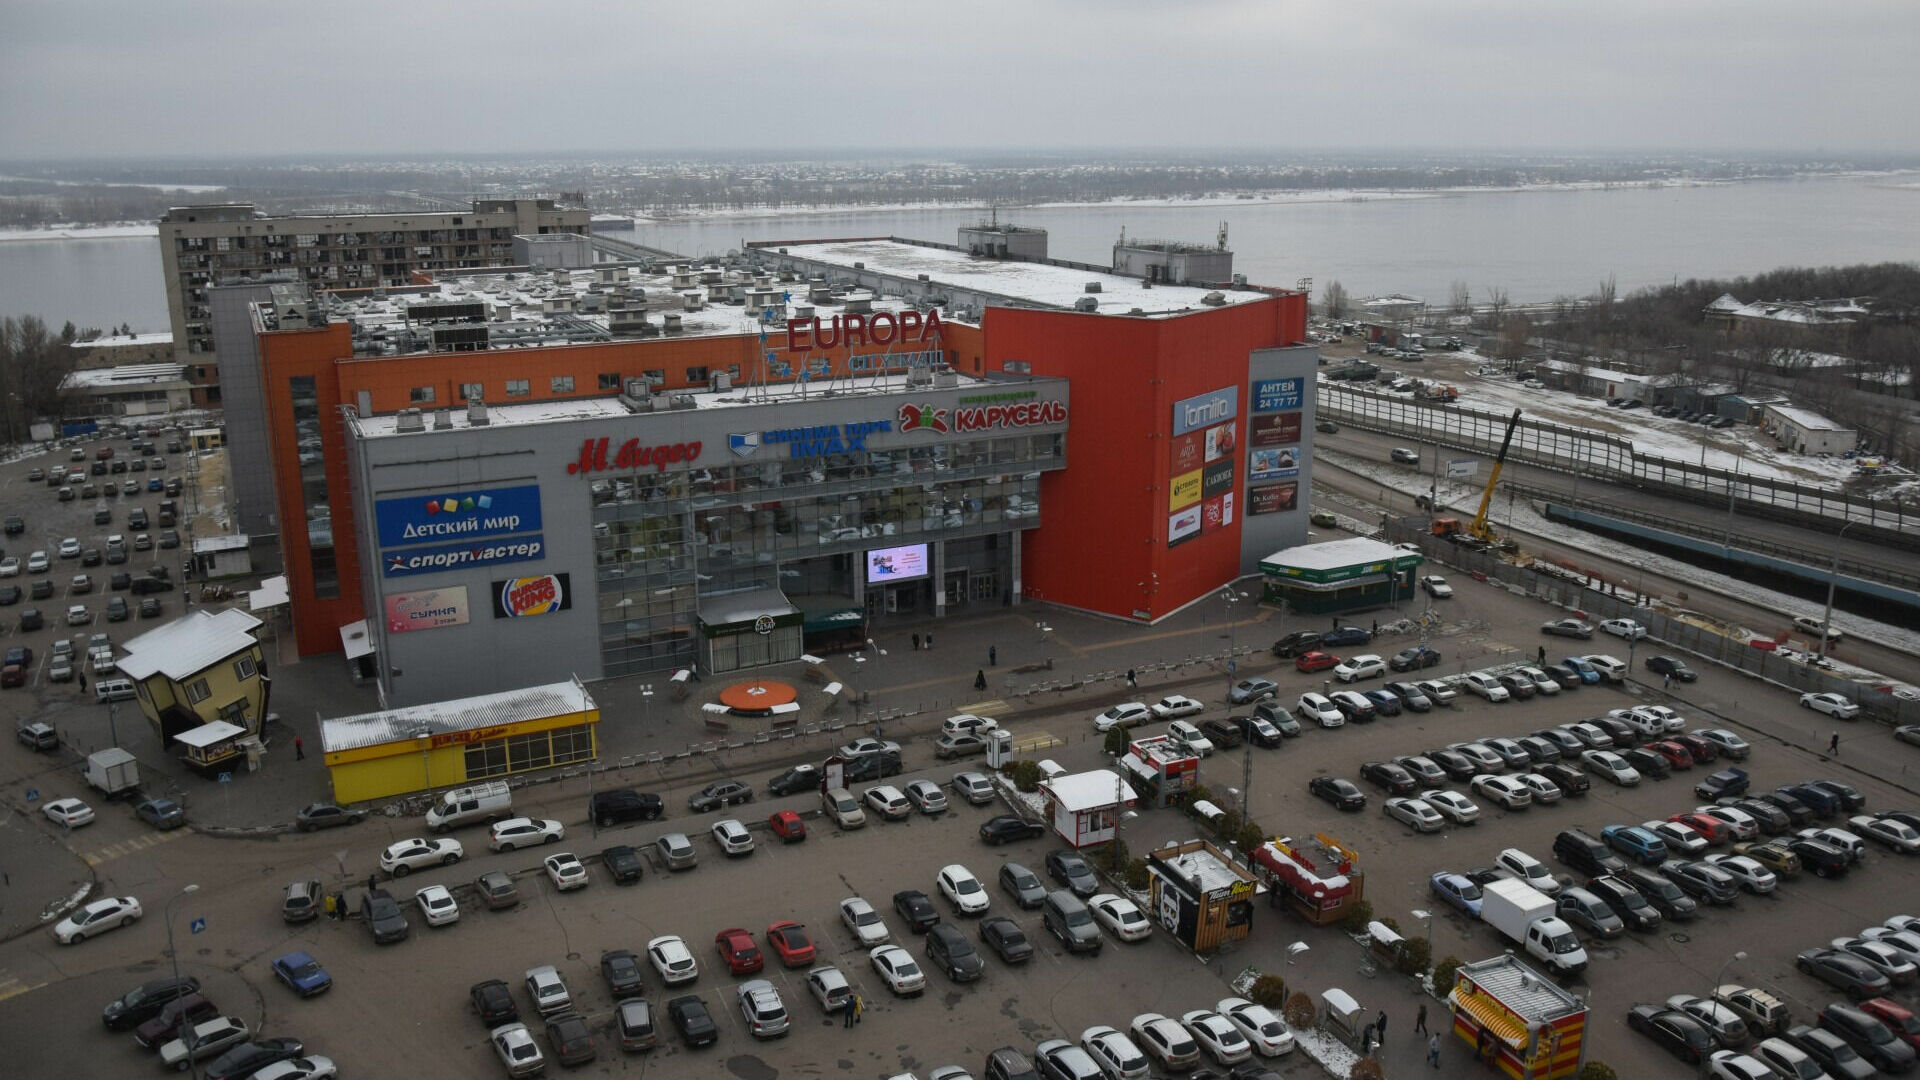 Здание ТРК Европа Сити Молл продают за миллиард в Волгограде